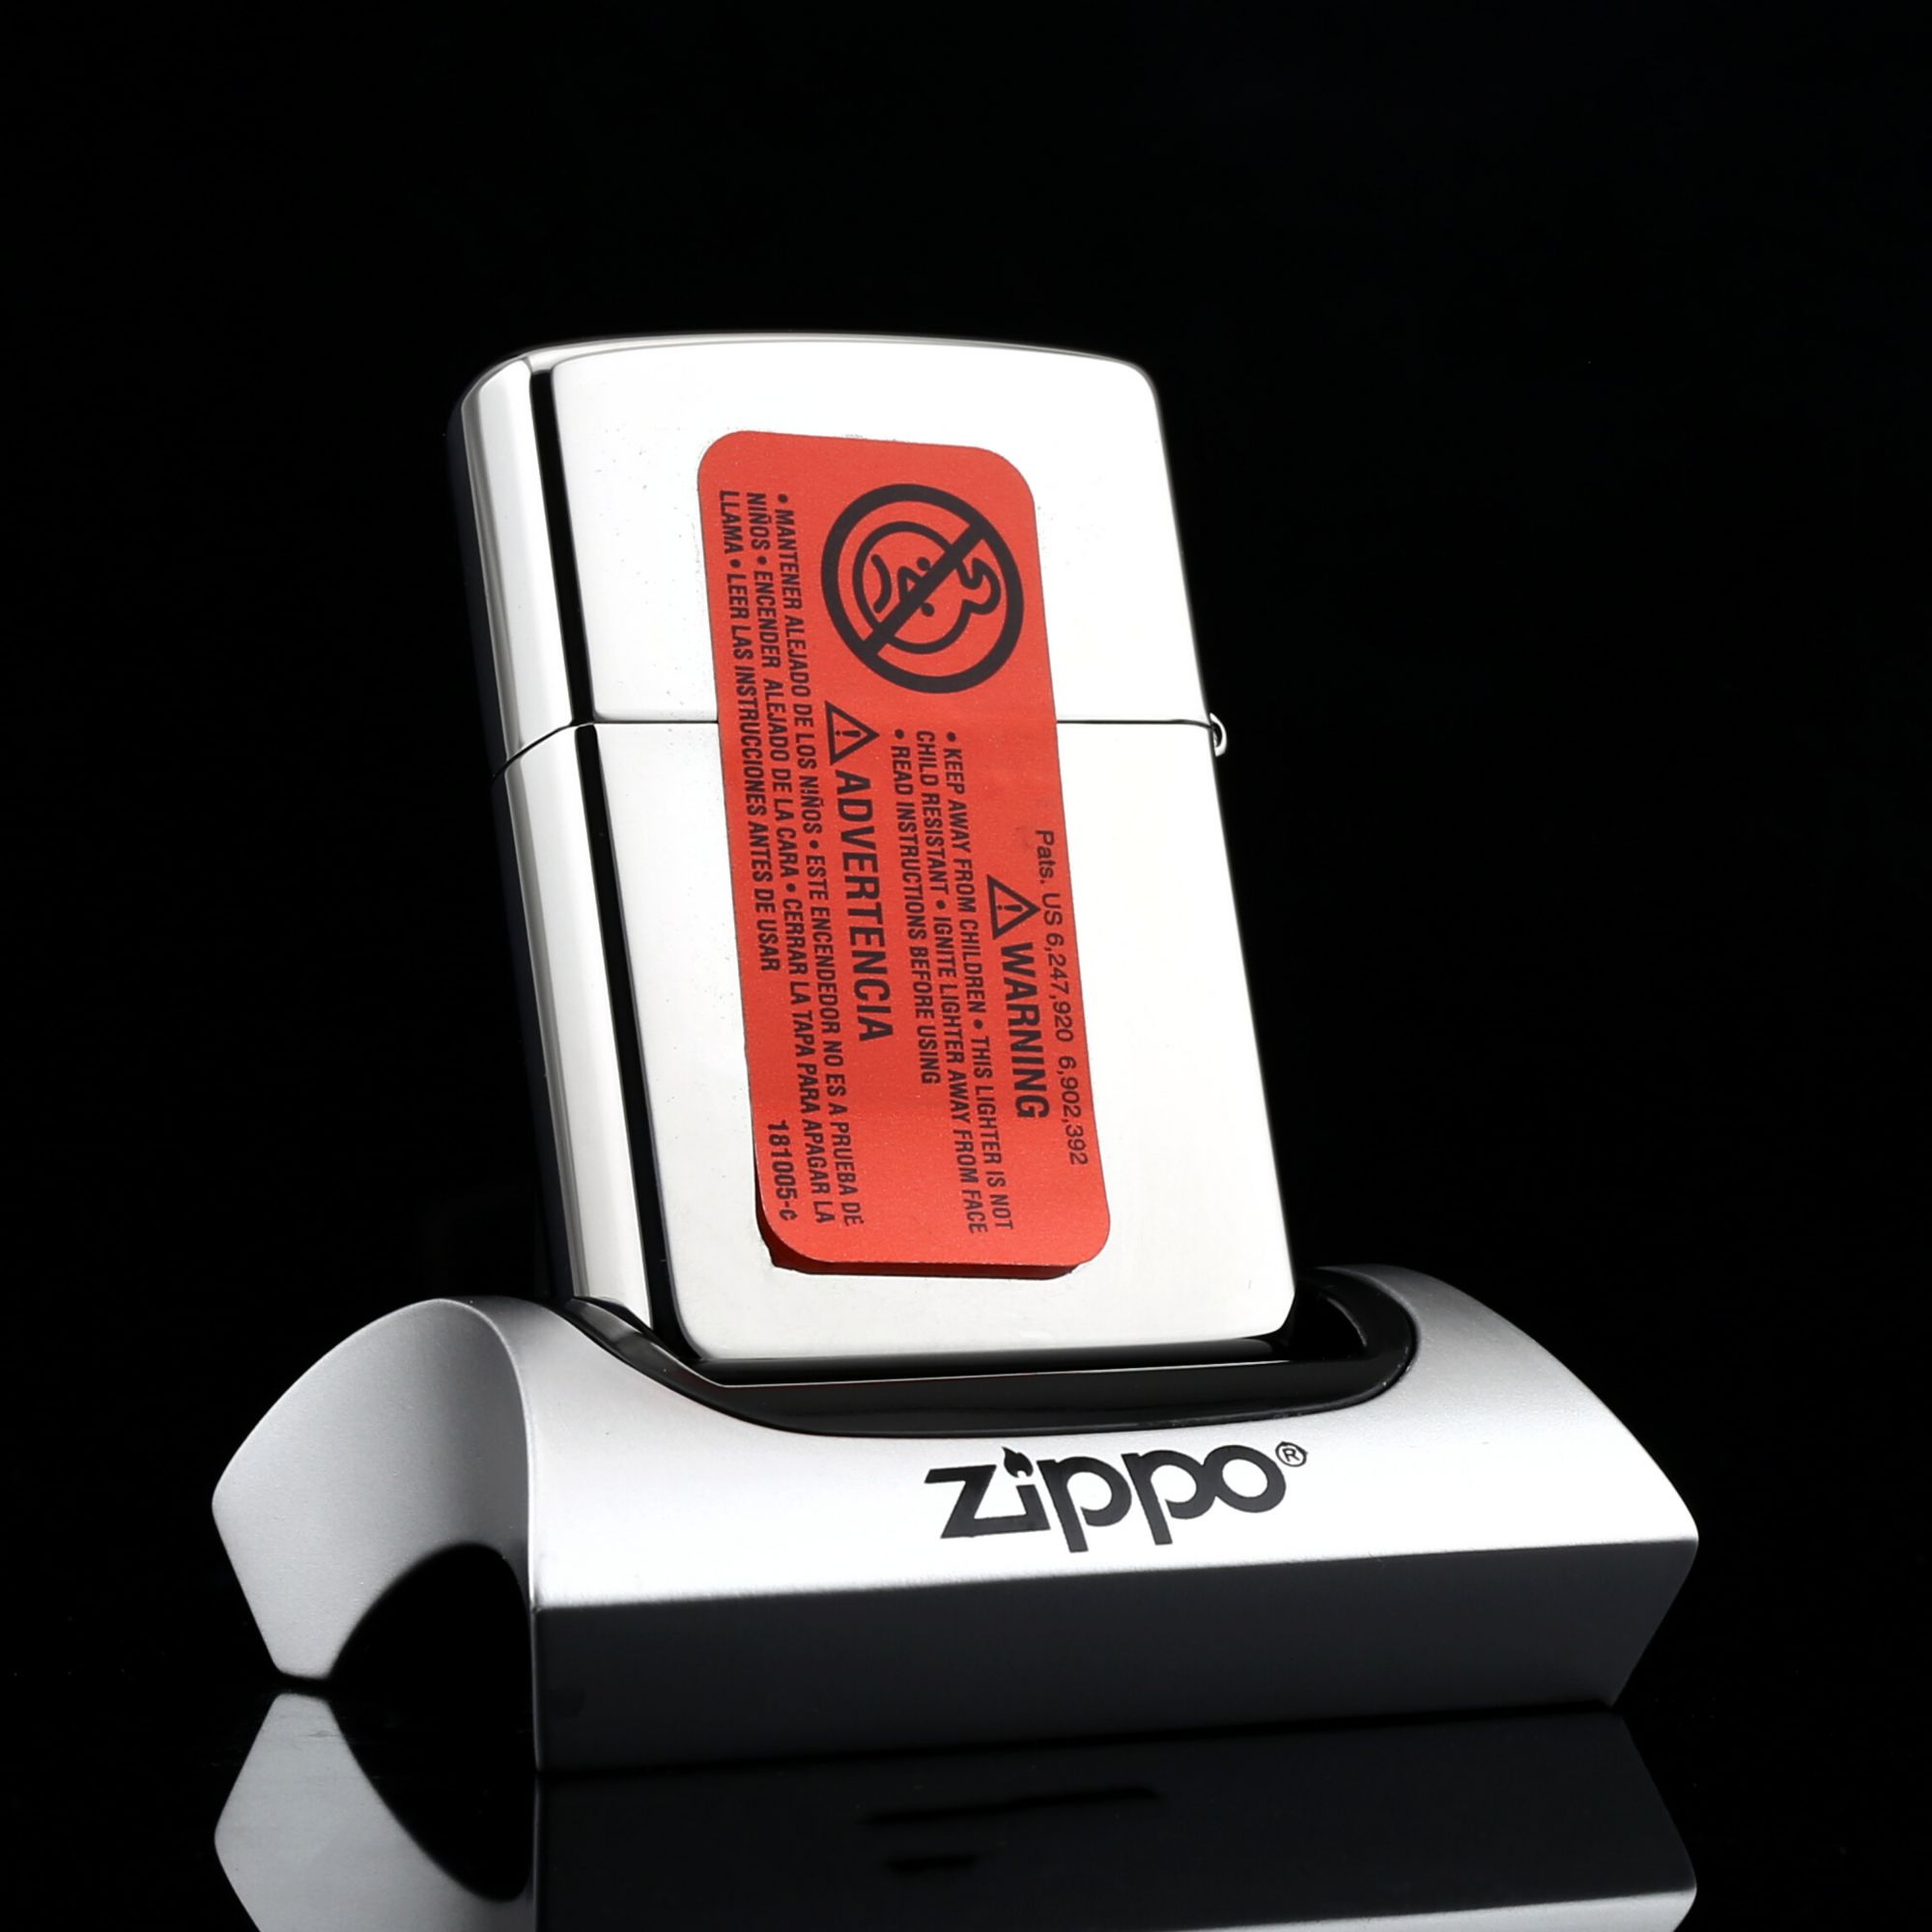 Zippo-HARD-ROCK-CAFE-SAVE-THE-PLANET-KEY-WEST-XVI-2000-zippo-la-ma-quy-hiem-cao-sap